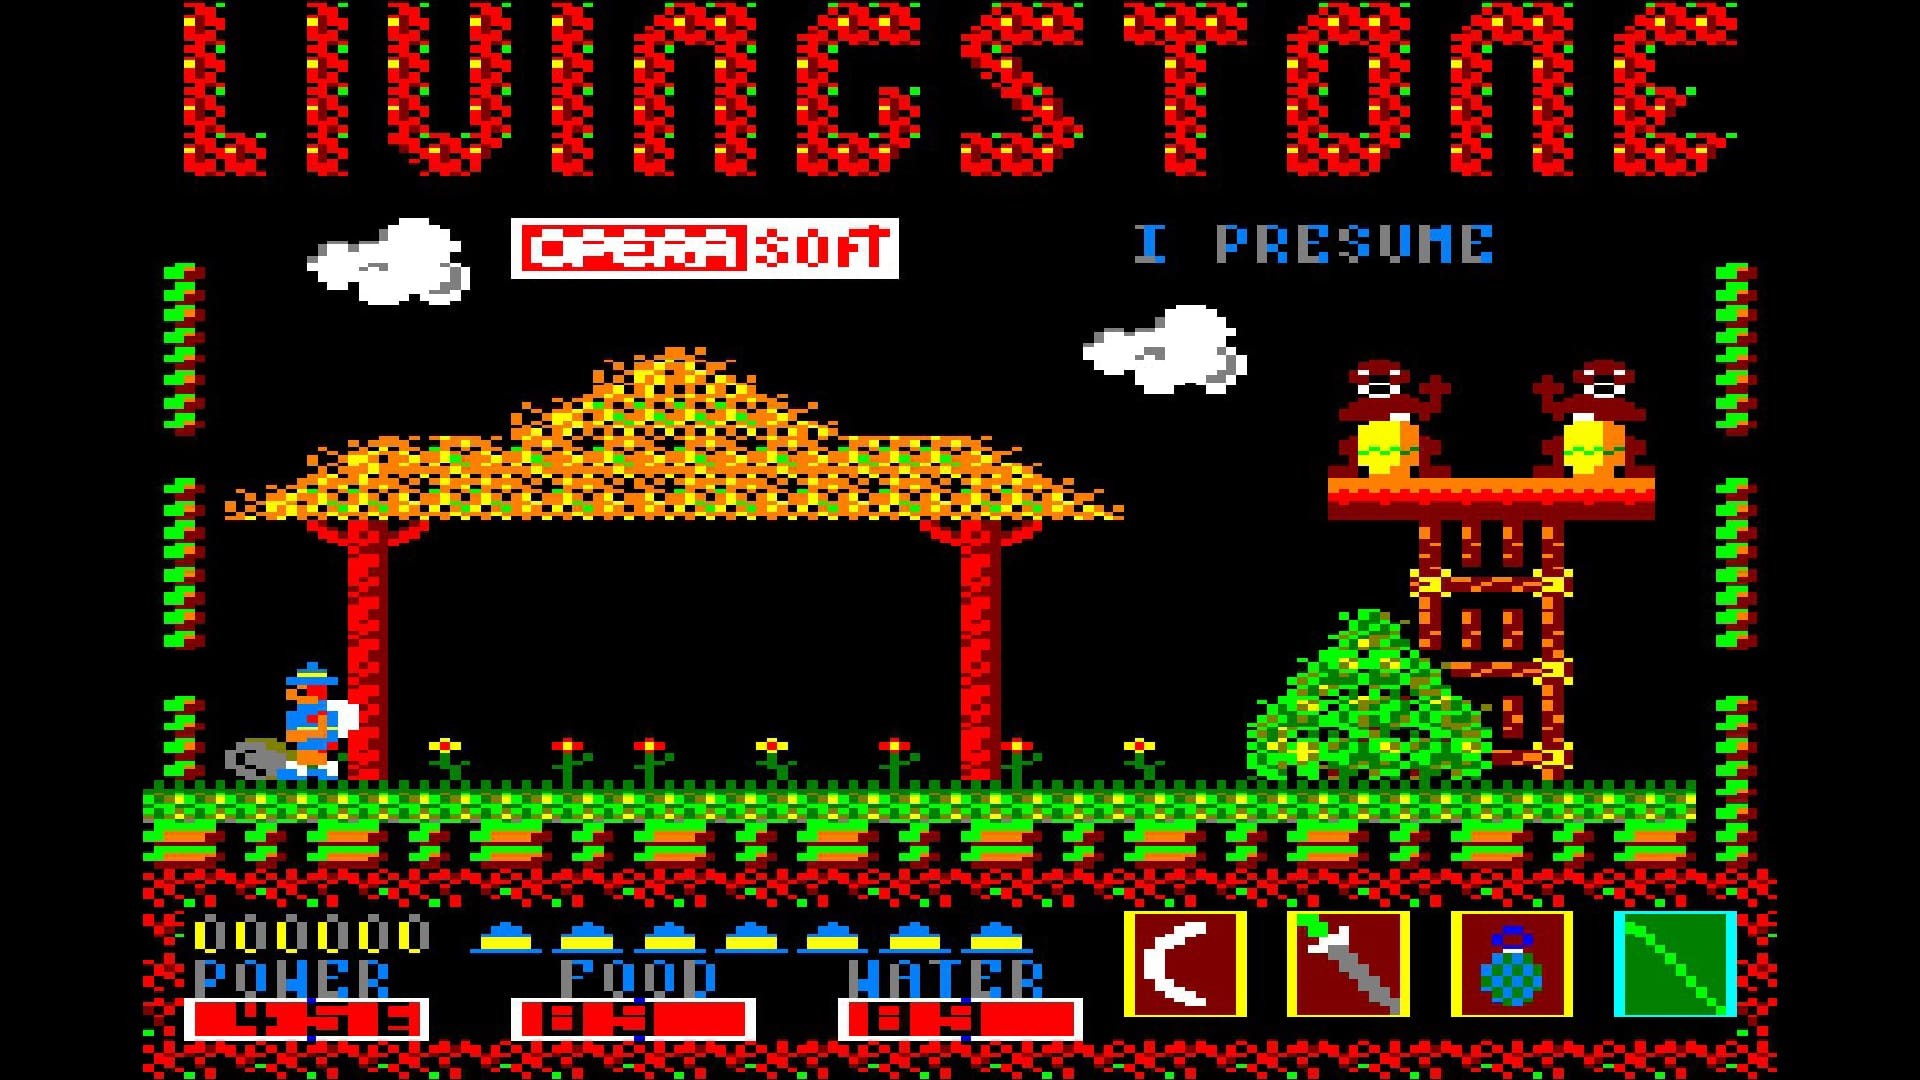 Retro Golden Age - Livingstone I Presume Steam CD Key, $3.38